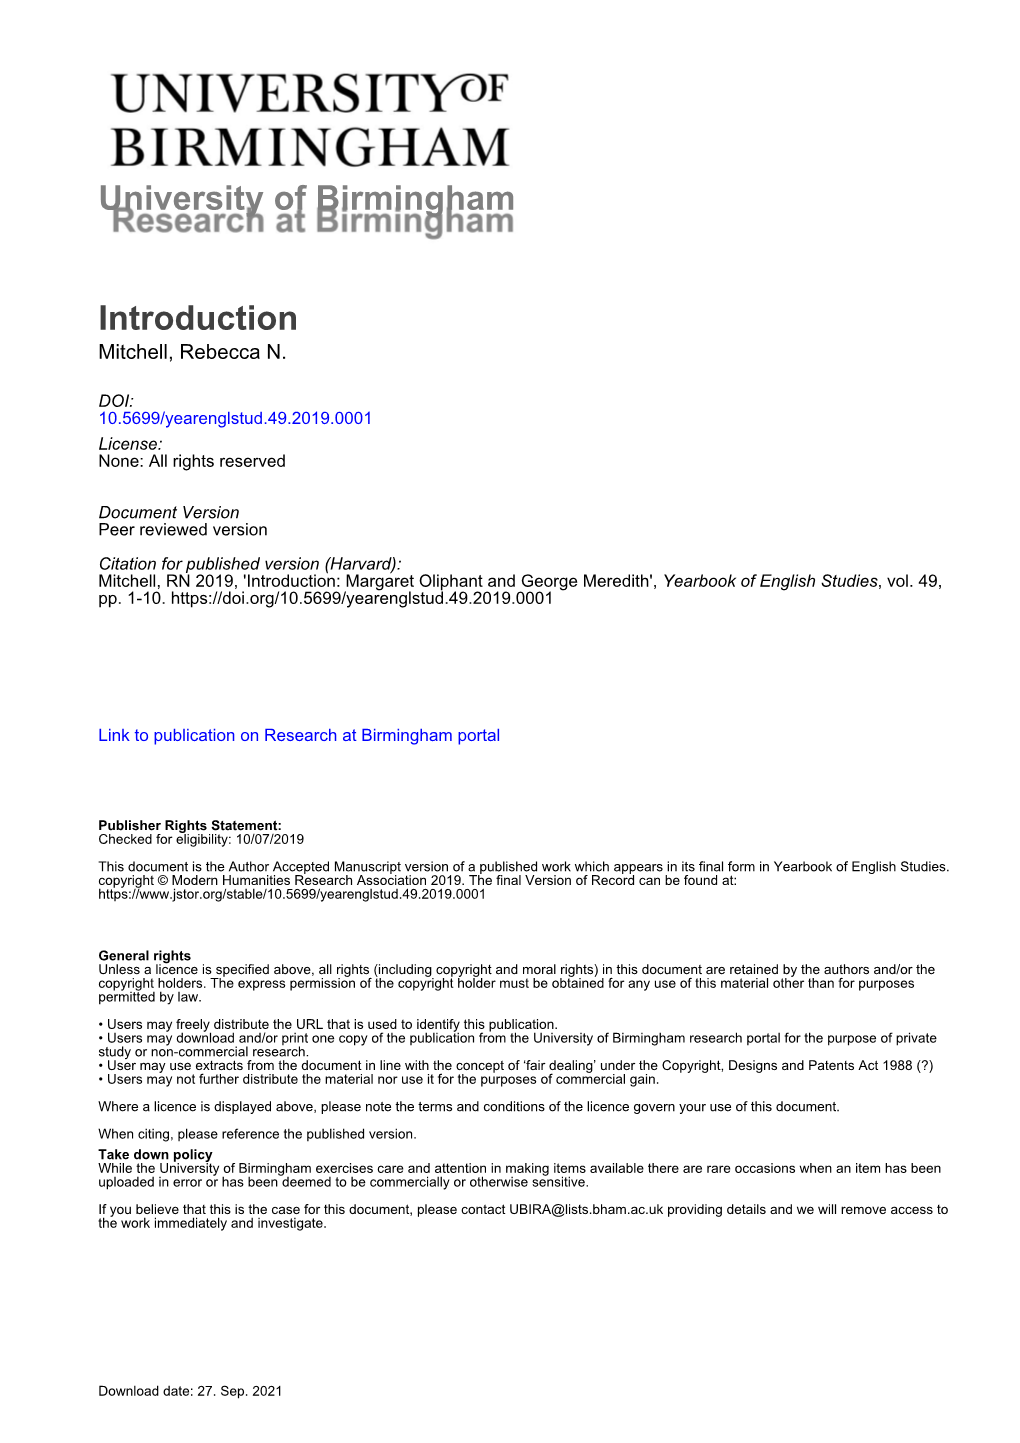 University of Birmingham Introduction